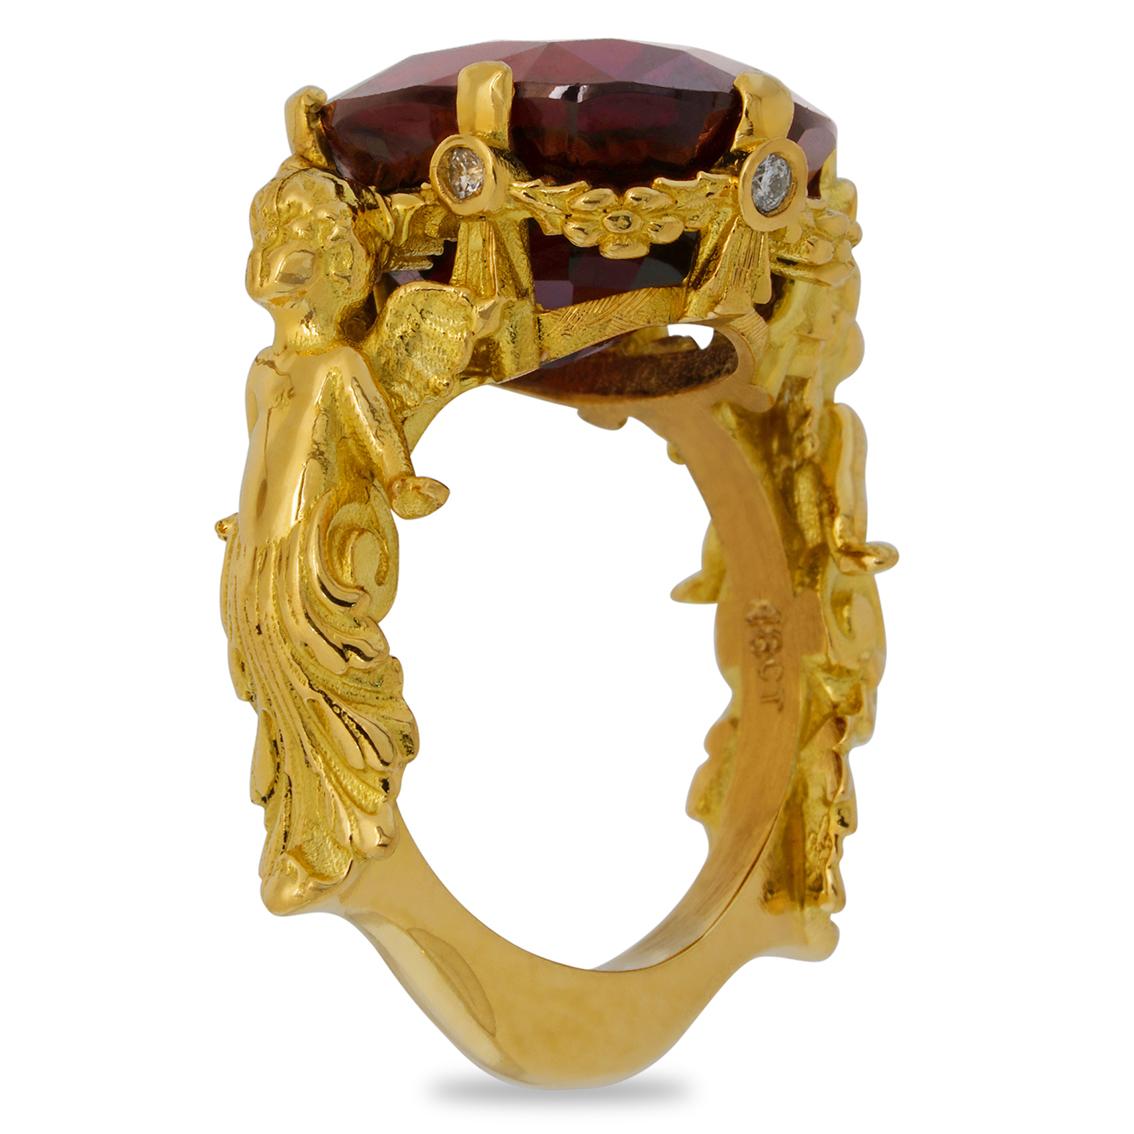 Renaissance Amorini Ring in 18 Karat Yellow Gold with Garnet and White Diamonds